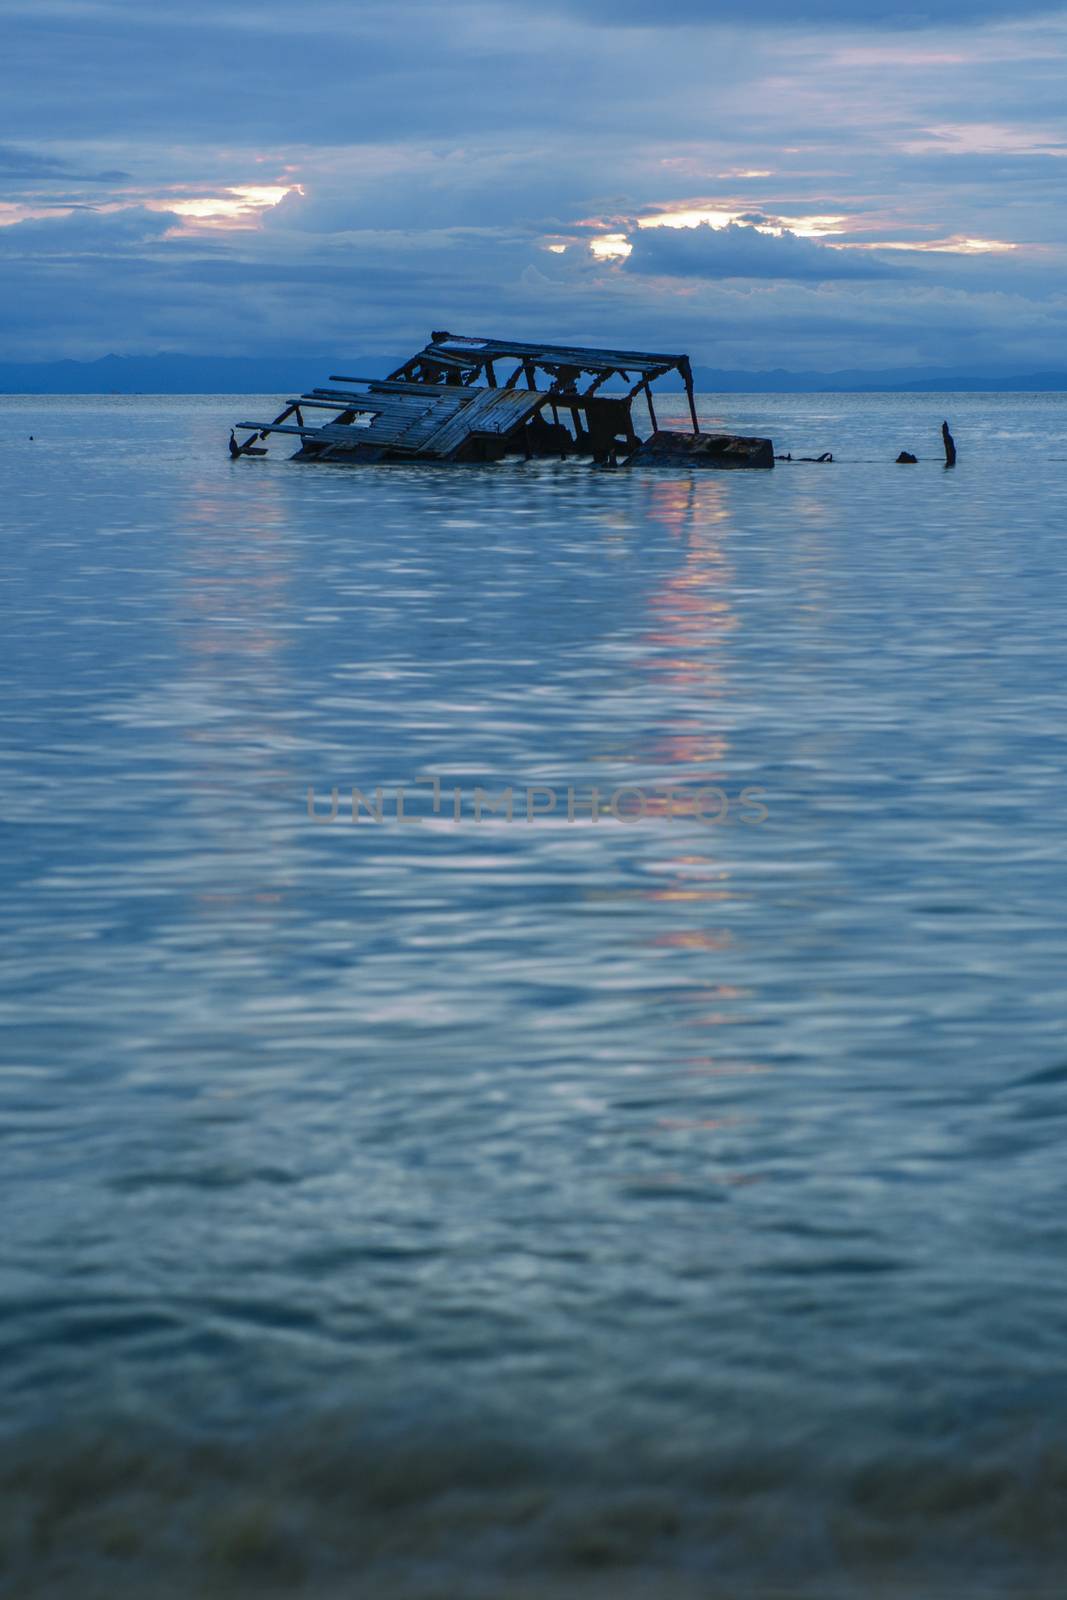 Sunk shipwrecks at Tangalooma Island in Moreton Bay by artistrobd